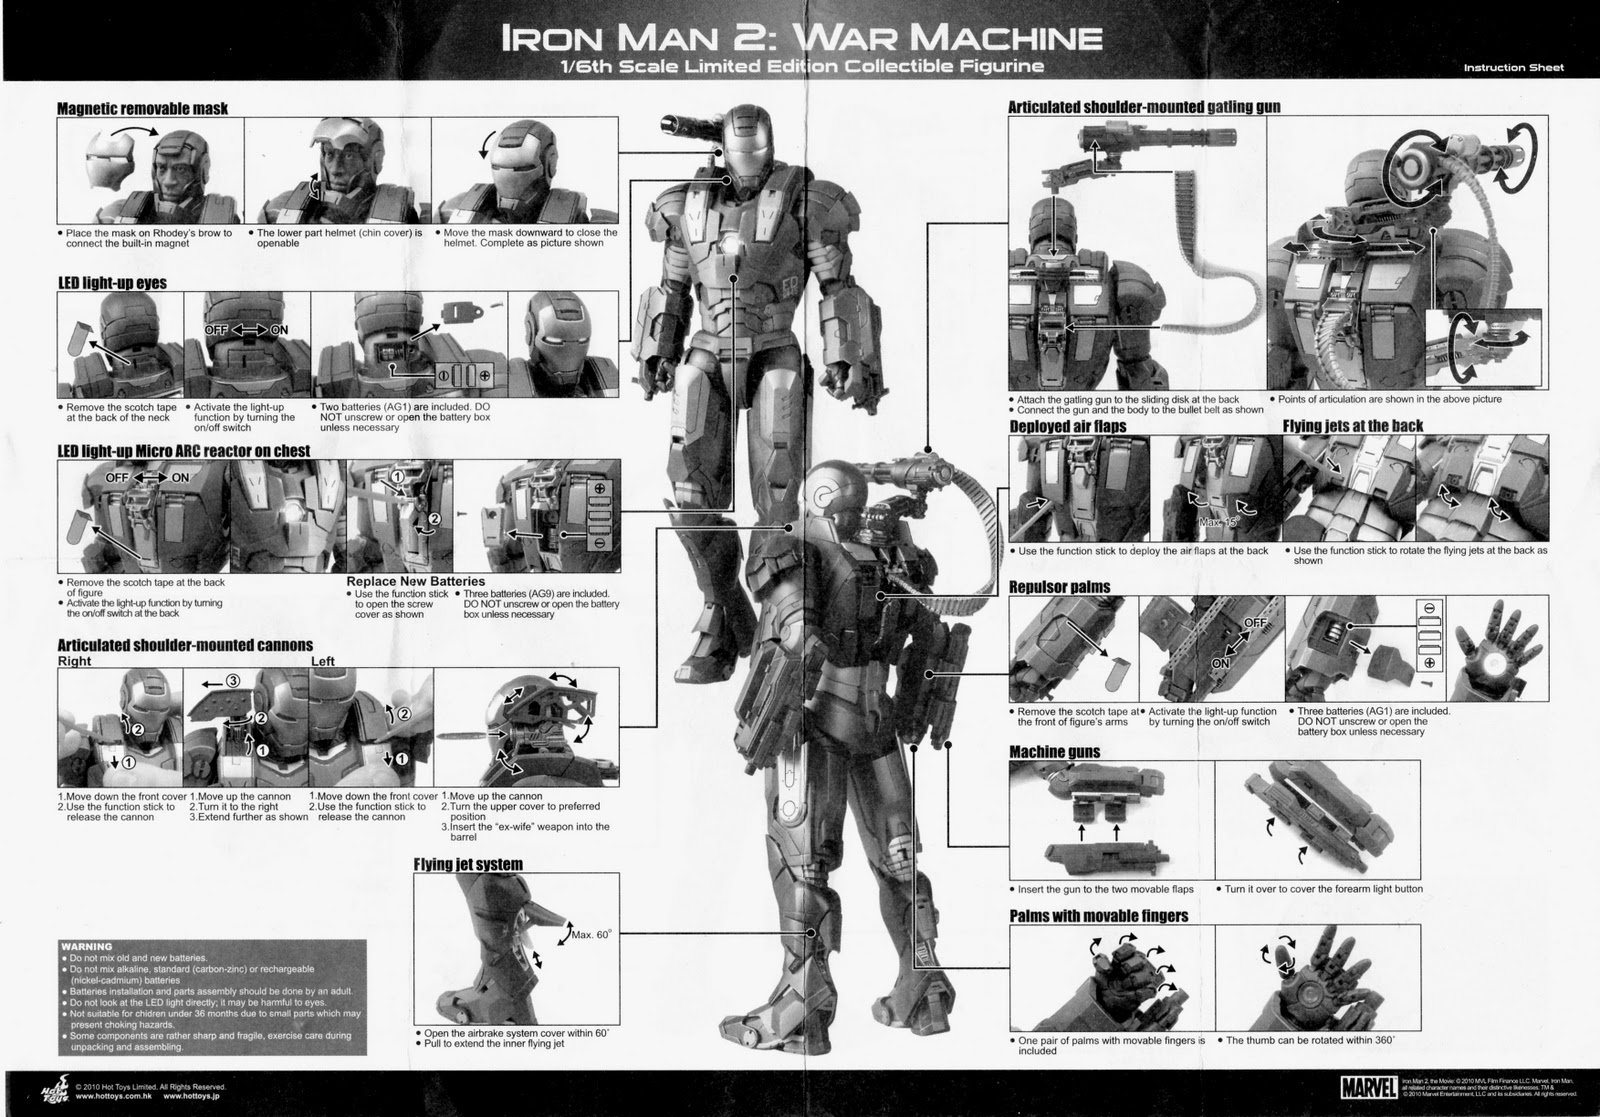 http://4.bp.blogspot.com/_2M4W1wPy3uI/TP6GJoChz6I/AAAAAAAAAmI/1cboFQKK6kE/s1600/HT+Instruction+Sheet+-+Iron+Man+2+War+Machine.jpg